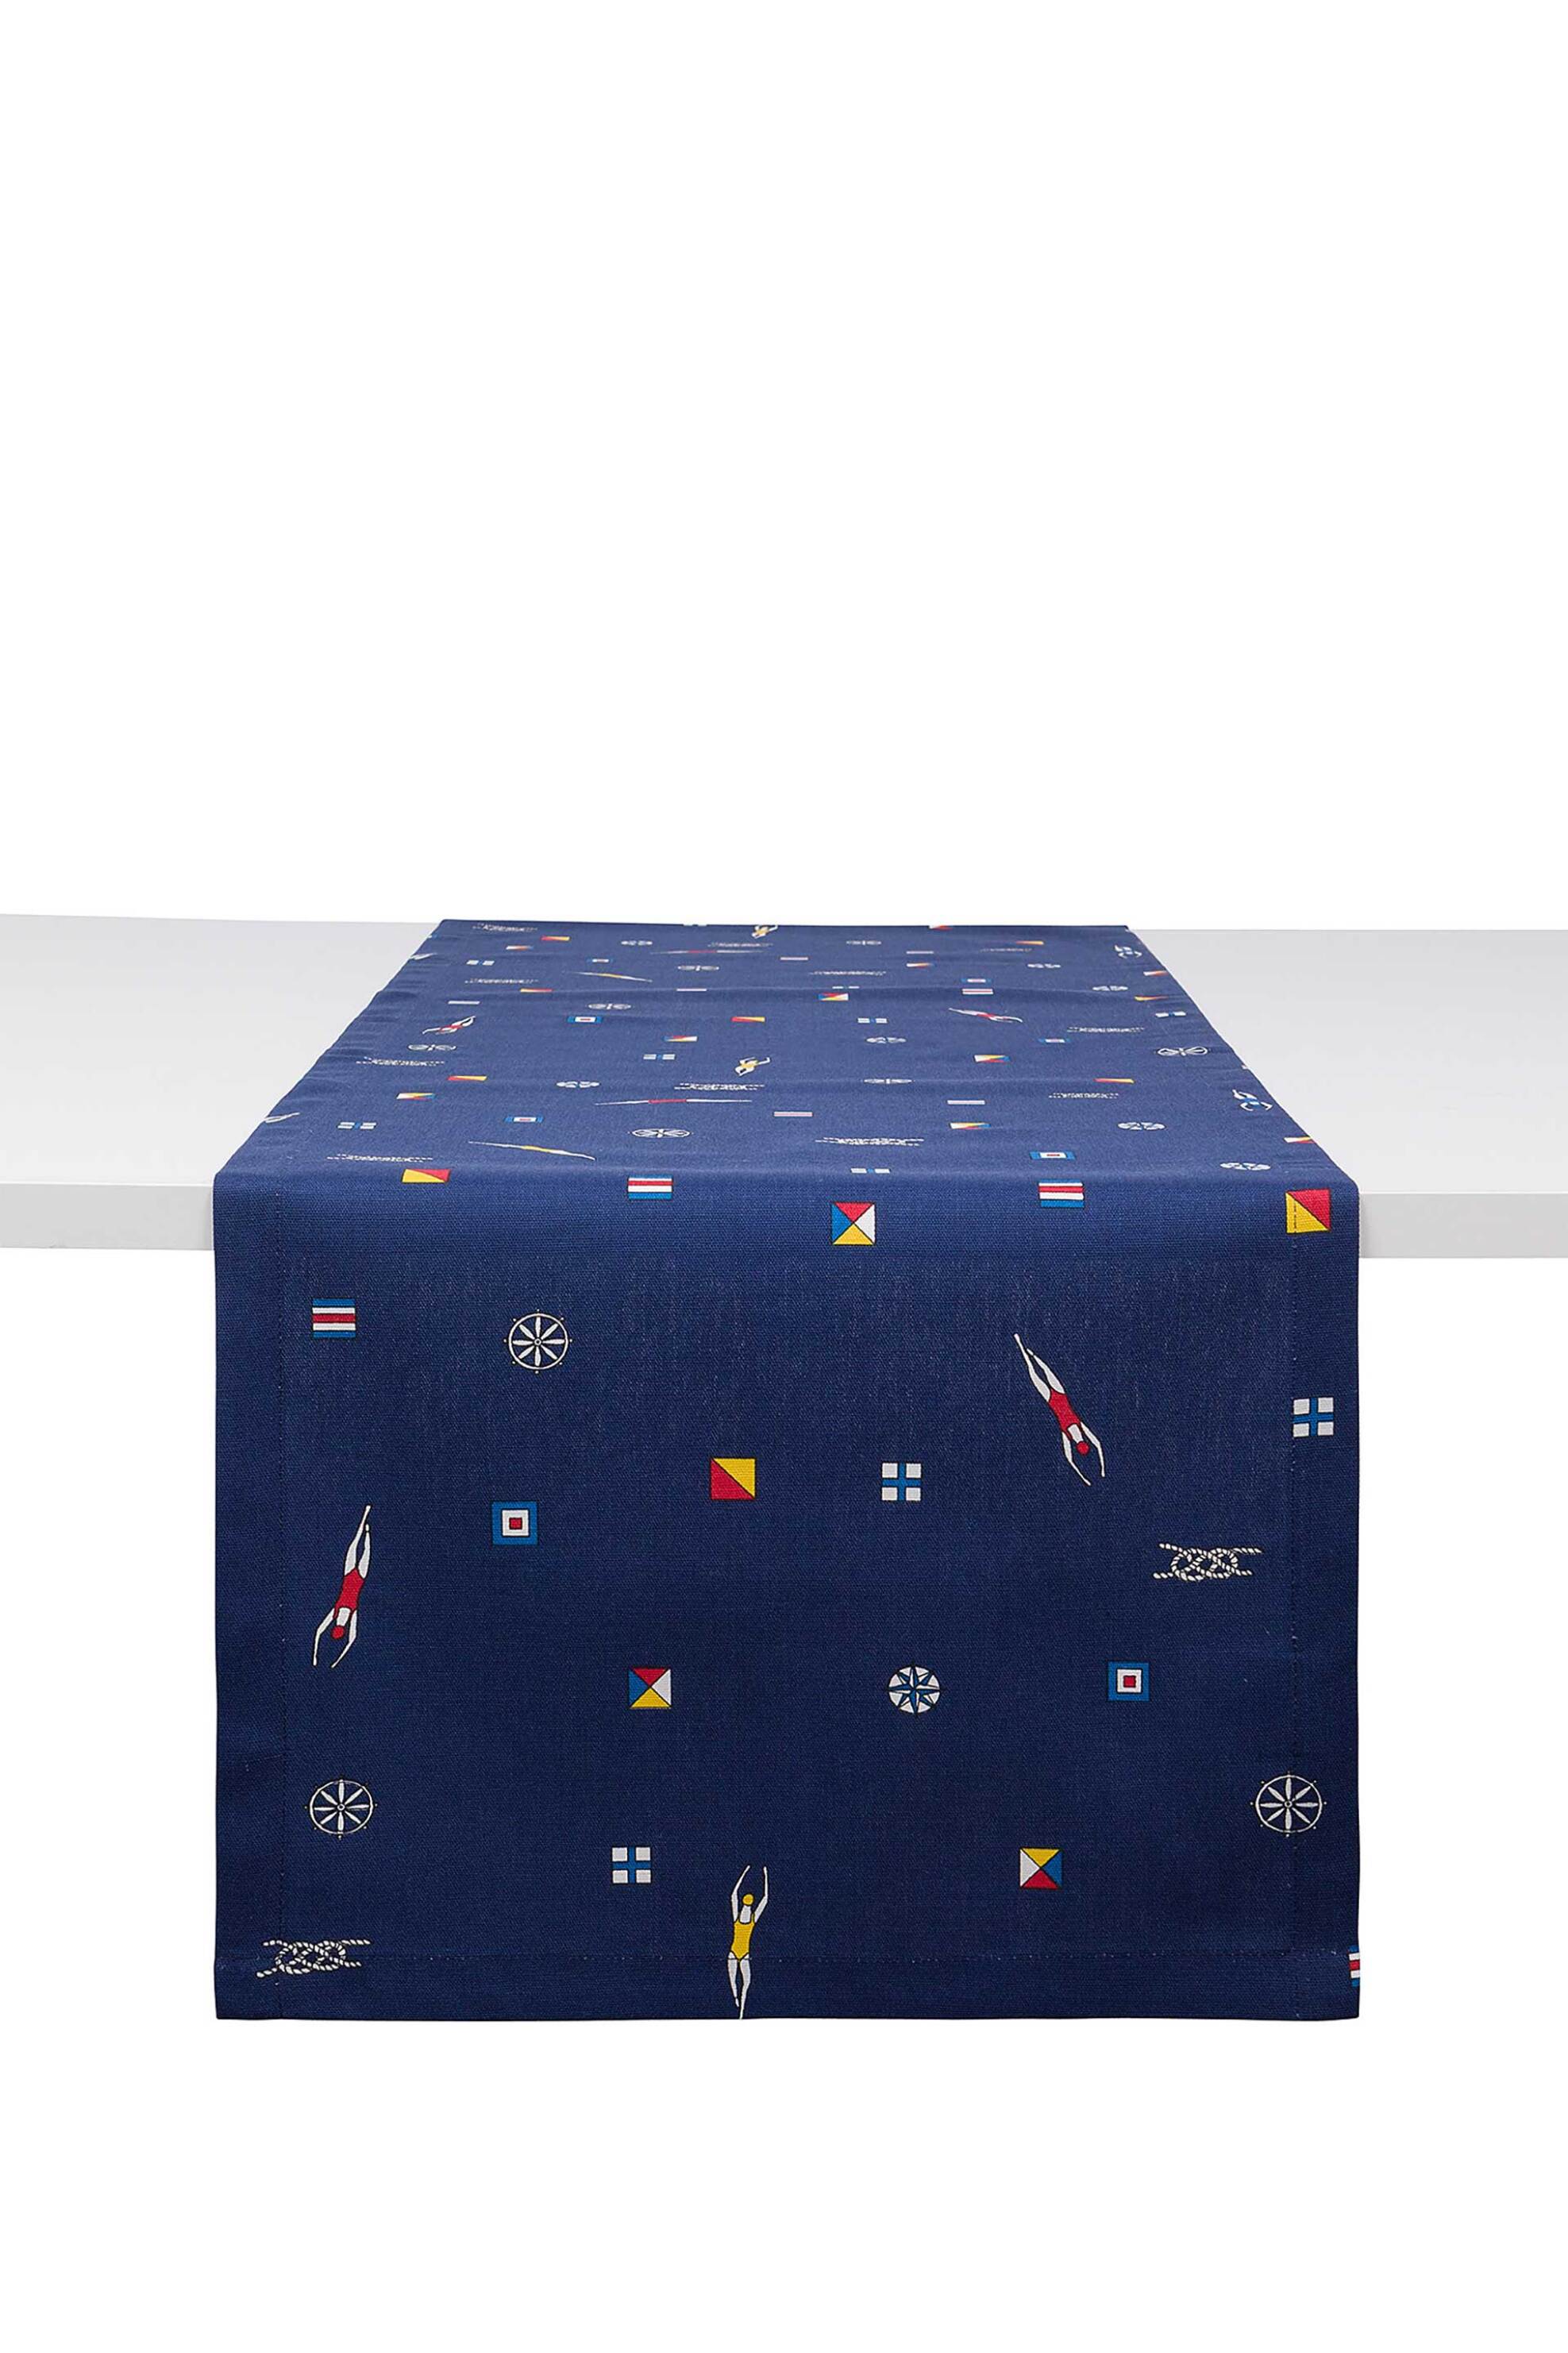 Home > ΚΟΥΖΙΝΑ > Τραβέρσες - Ράνερ Coincasa βαμβακερό ράνερ με nautical flag print 140 x 40 cm - 007357815 Μπλε Σκούρο